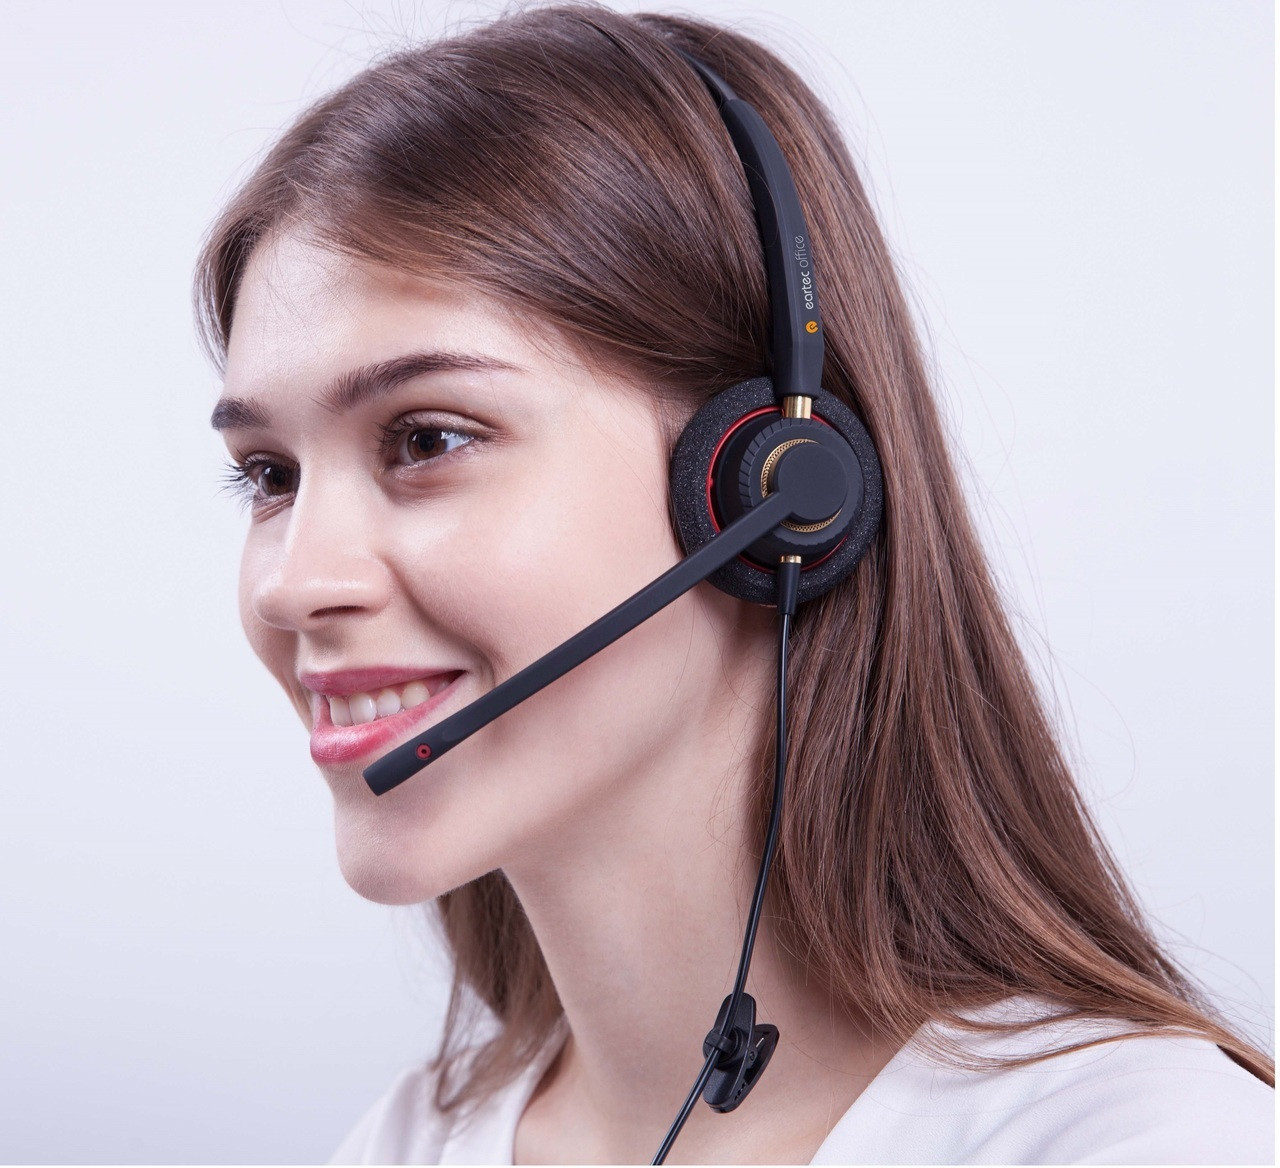 Avaya 1408 Digital Telephone Headset - EAR510